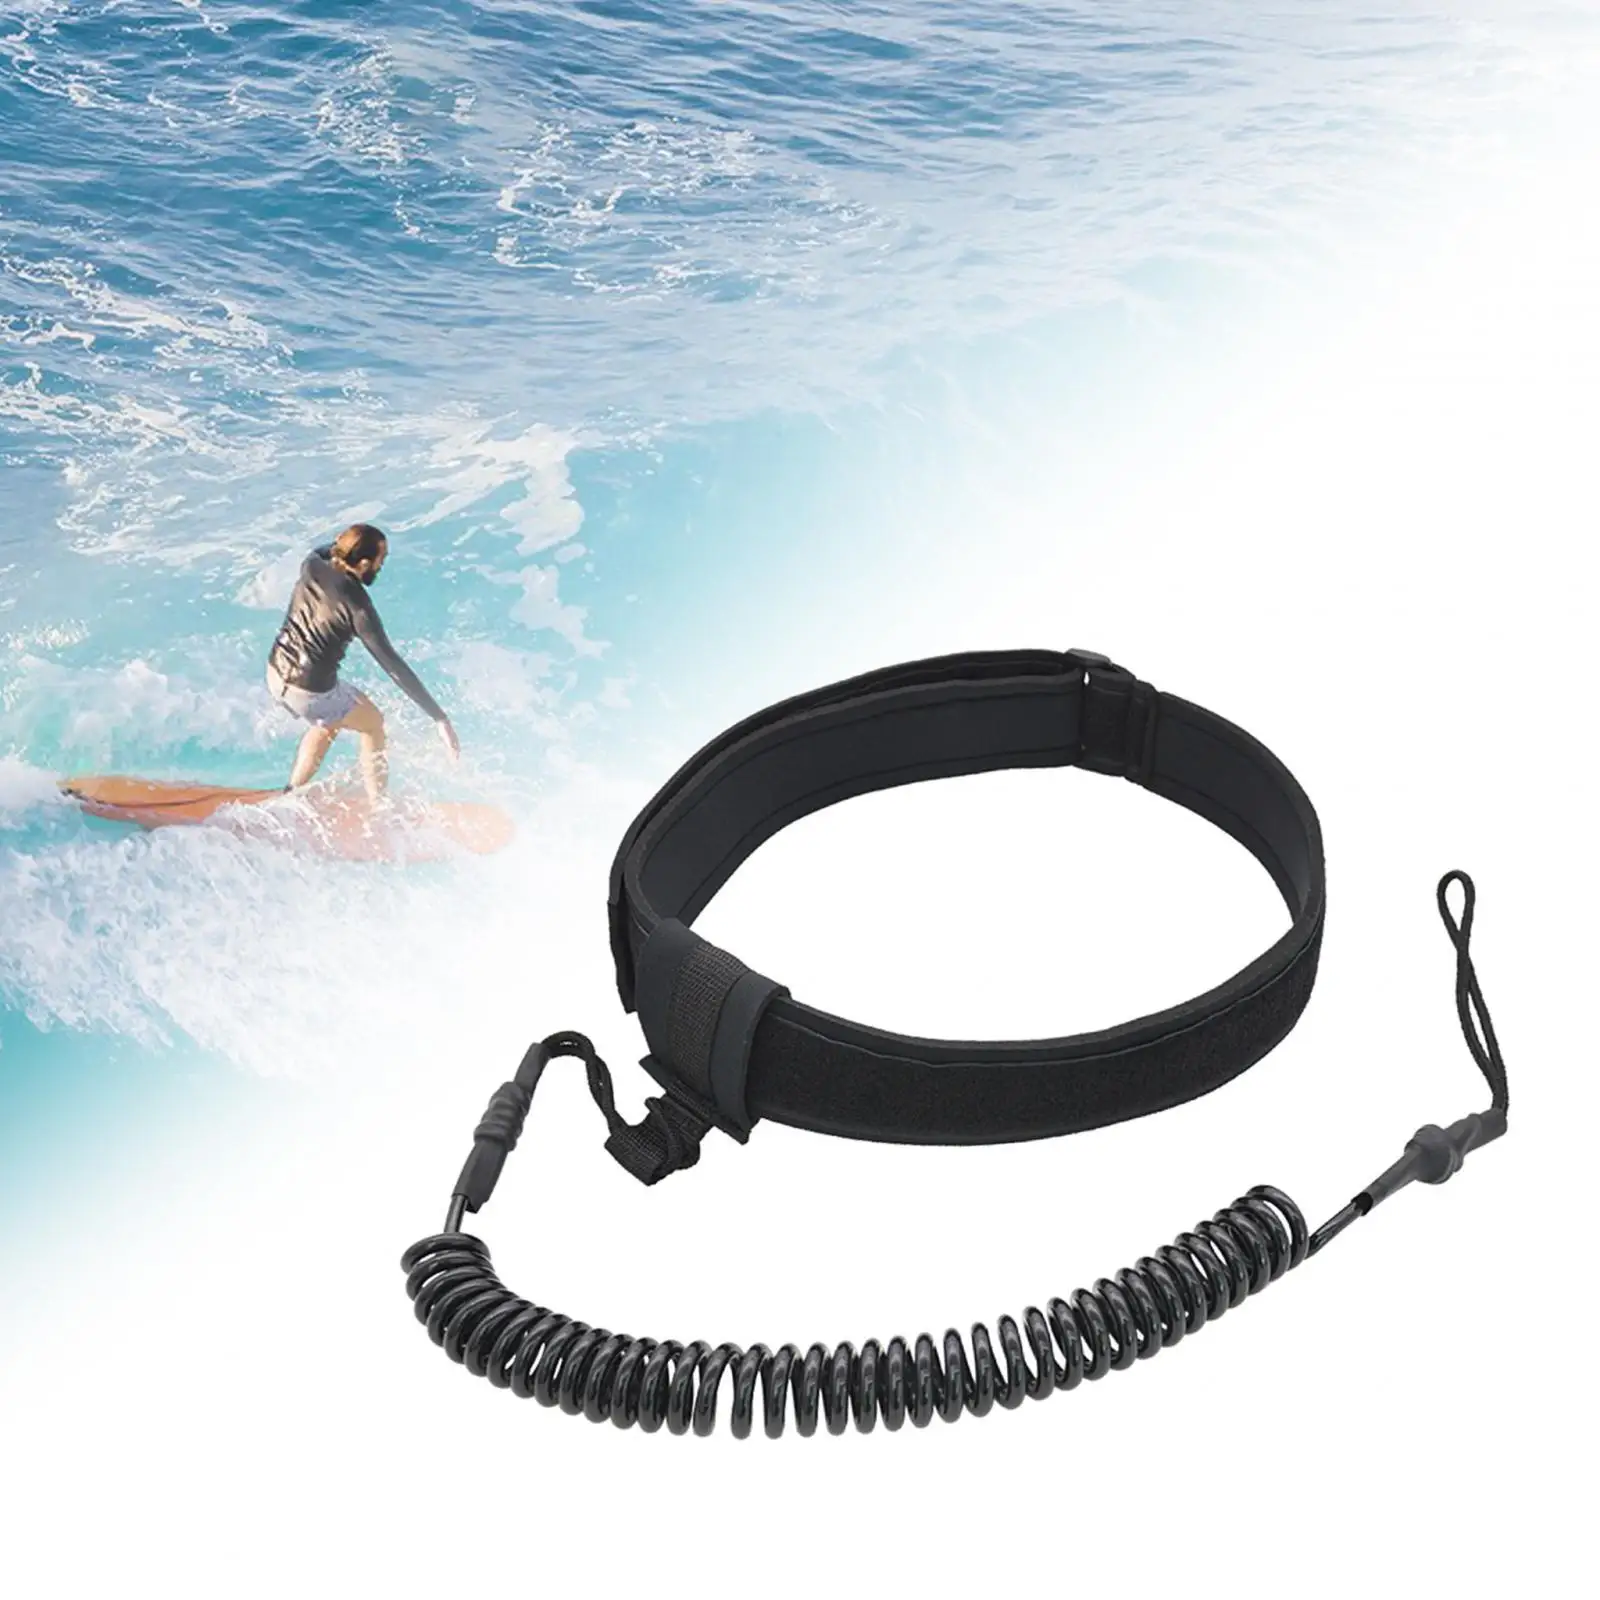 Surfboard Leash Safety Leash Adjustable Waist Rope Comfortable Waist Belt for Kayaking Shortboard Skimboard Surf Accessories